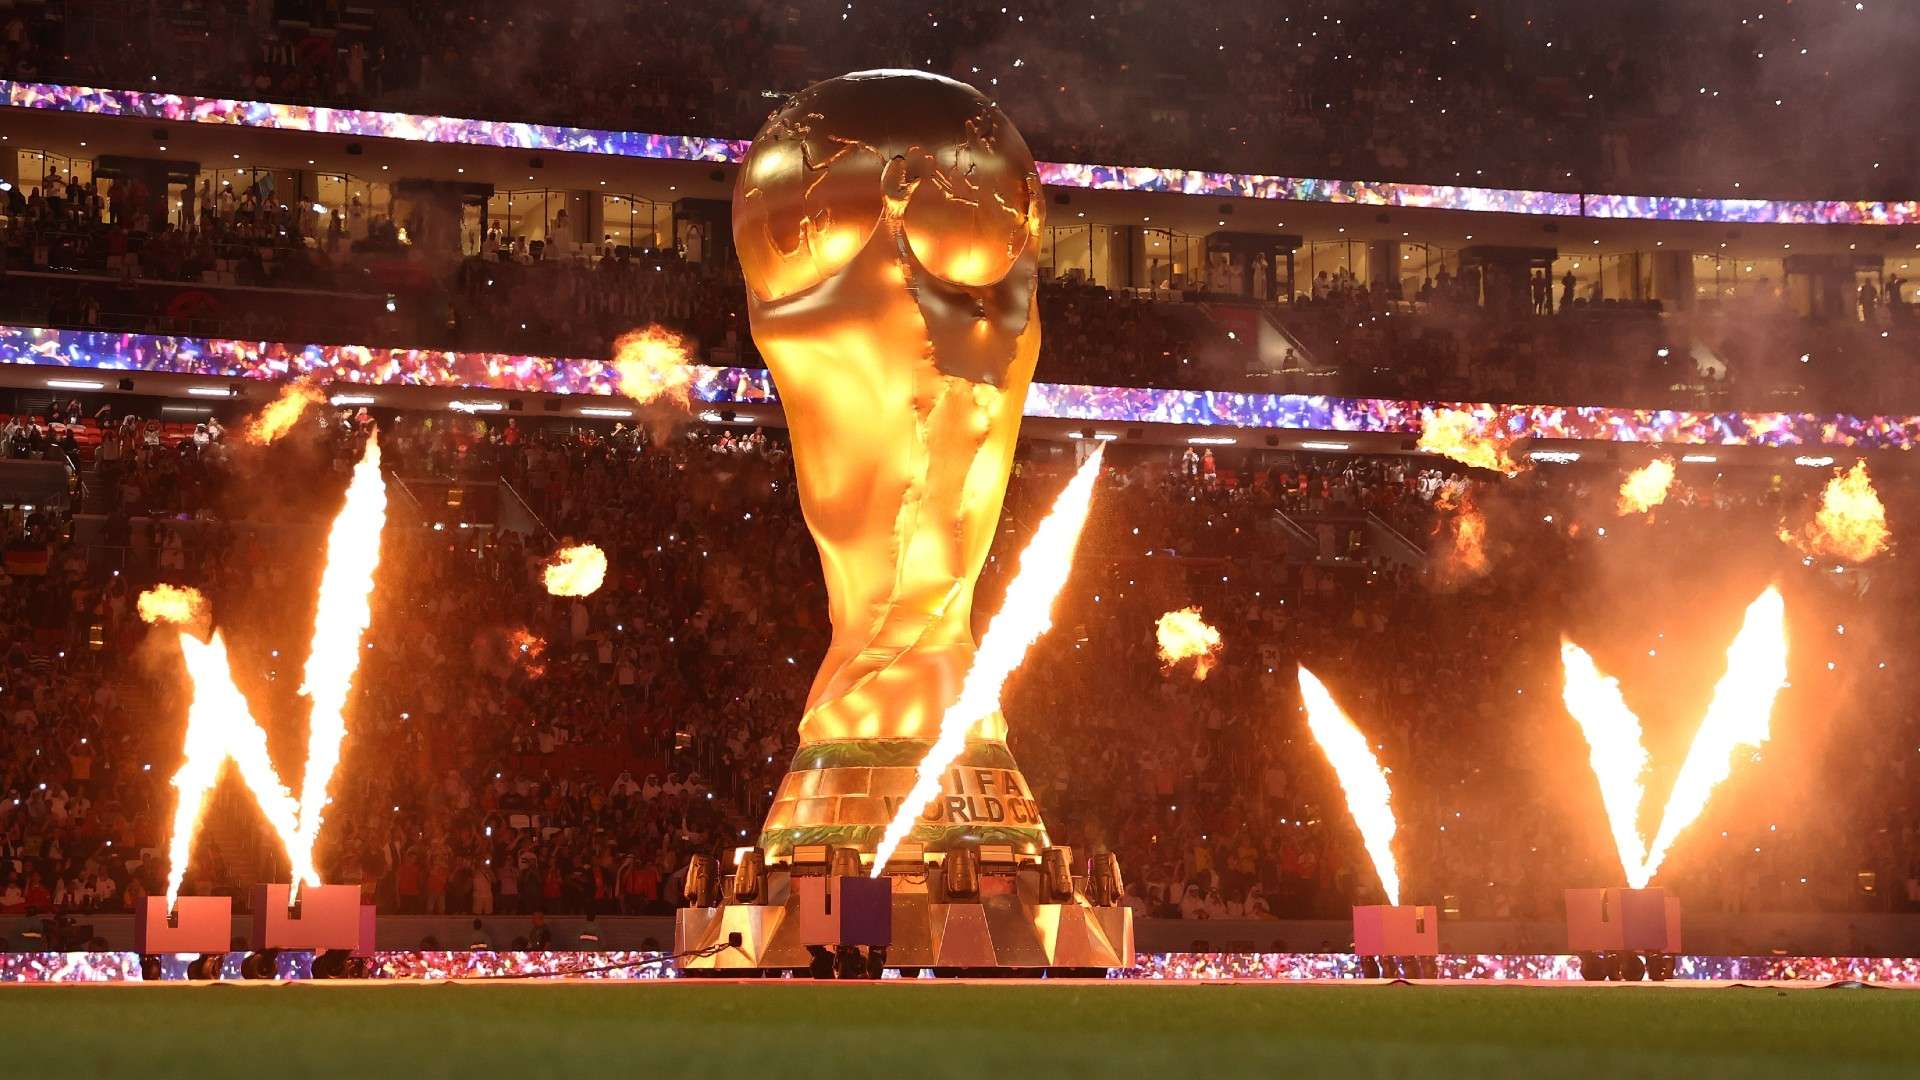 FIFA World Cup Qatar 2022 Tournament